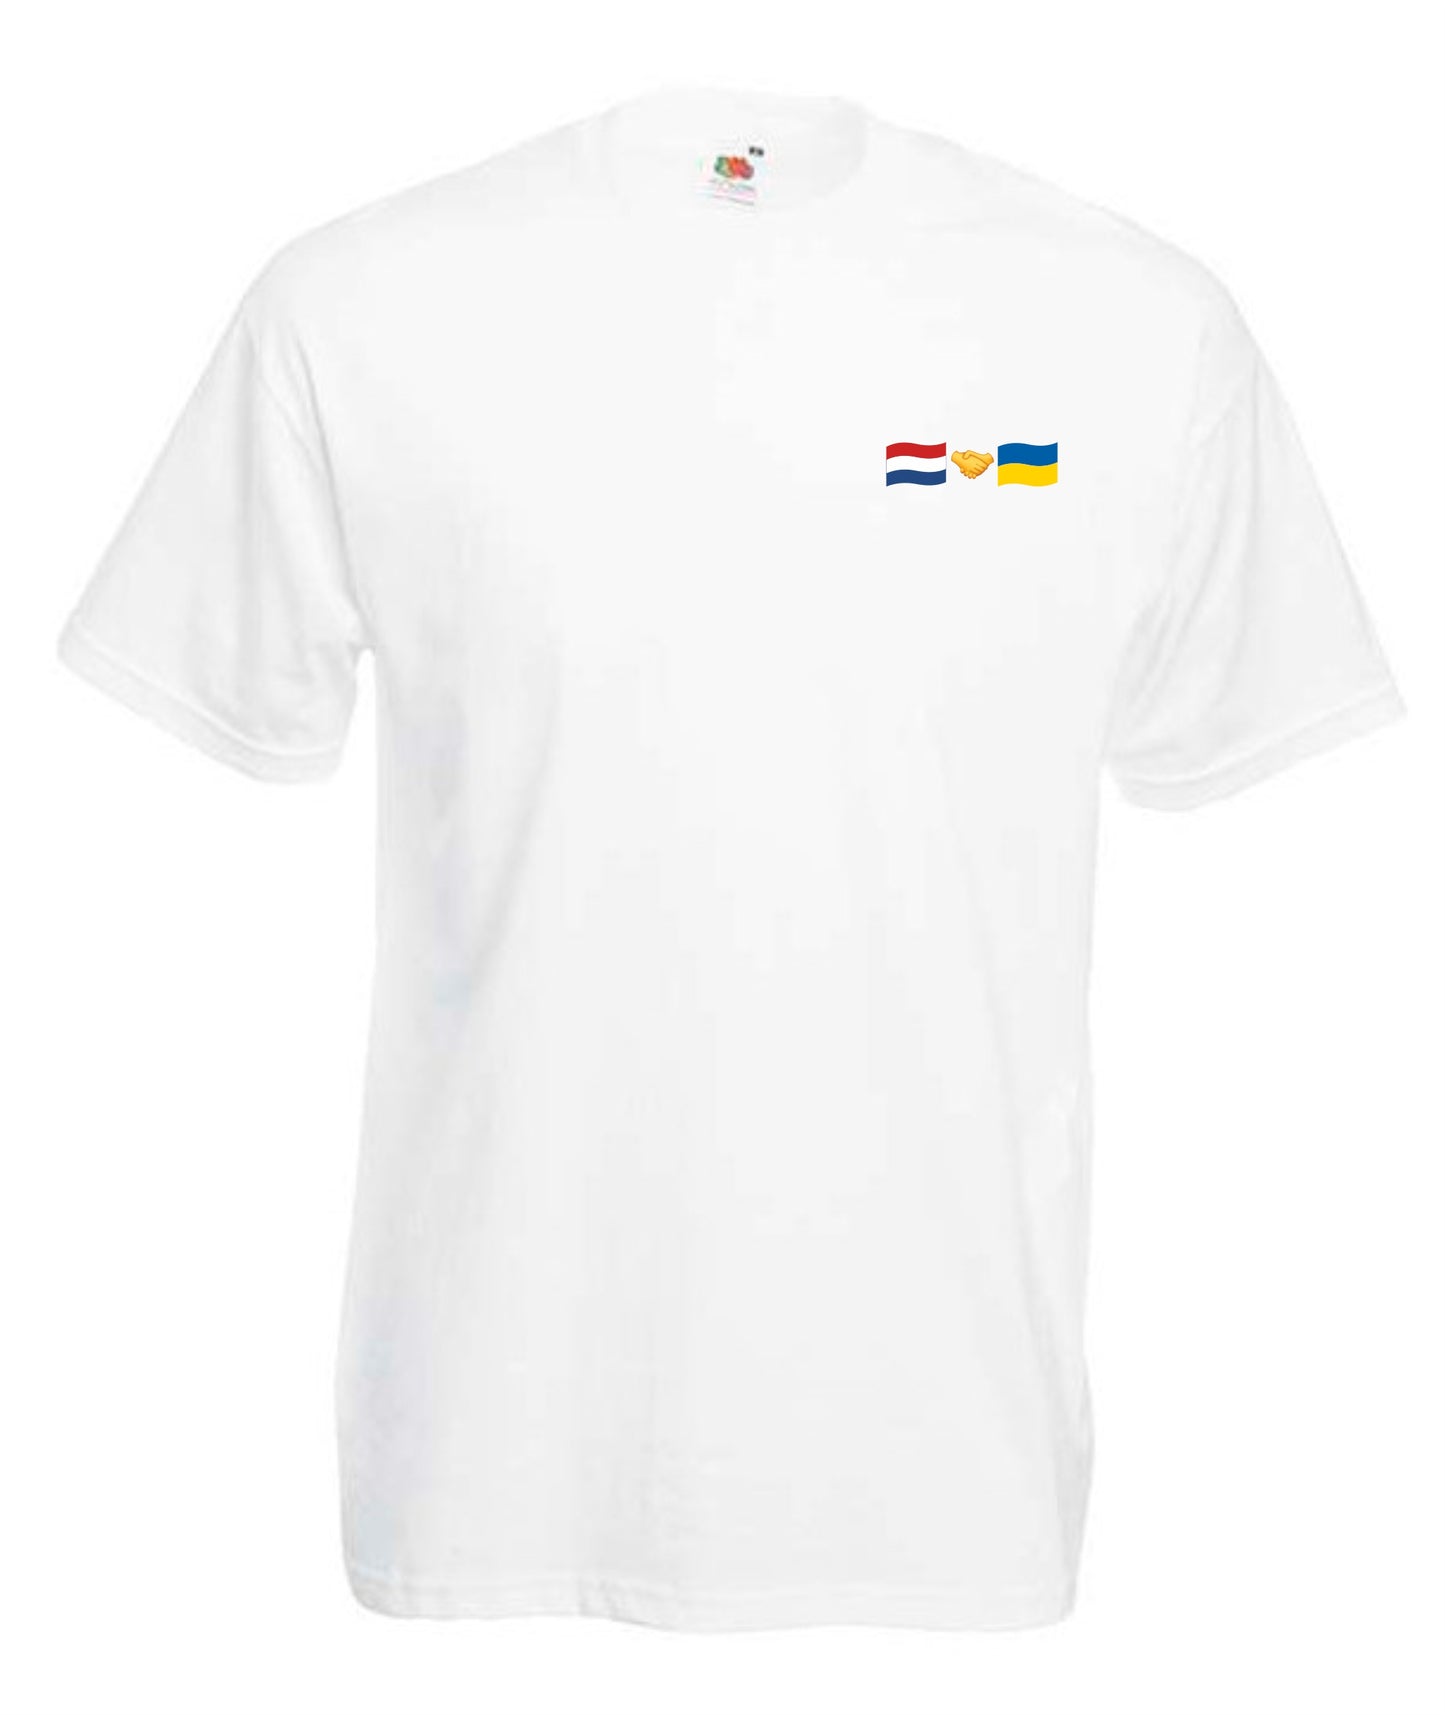 T-shirt Netherlands + Ukraine (small logo)